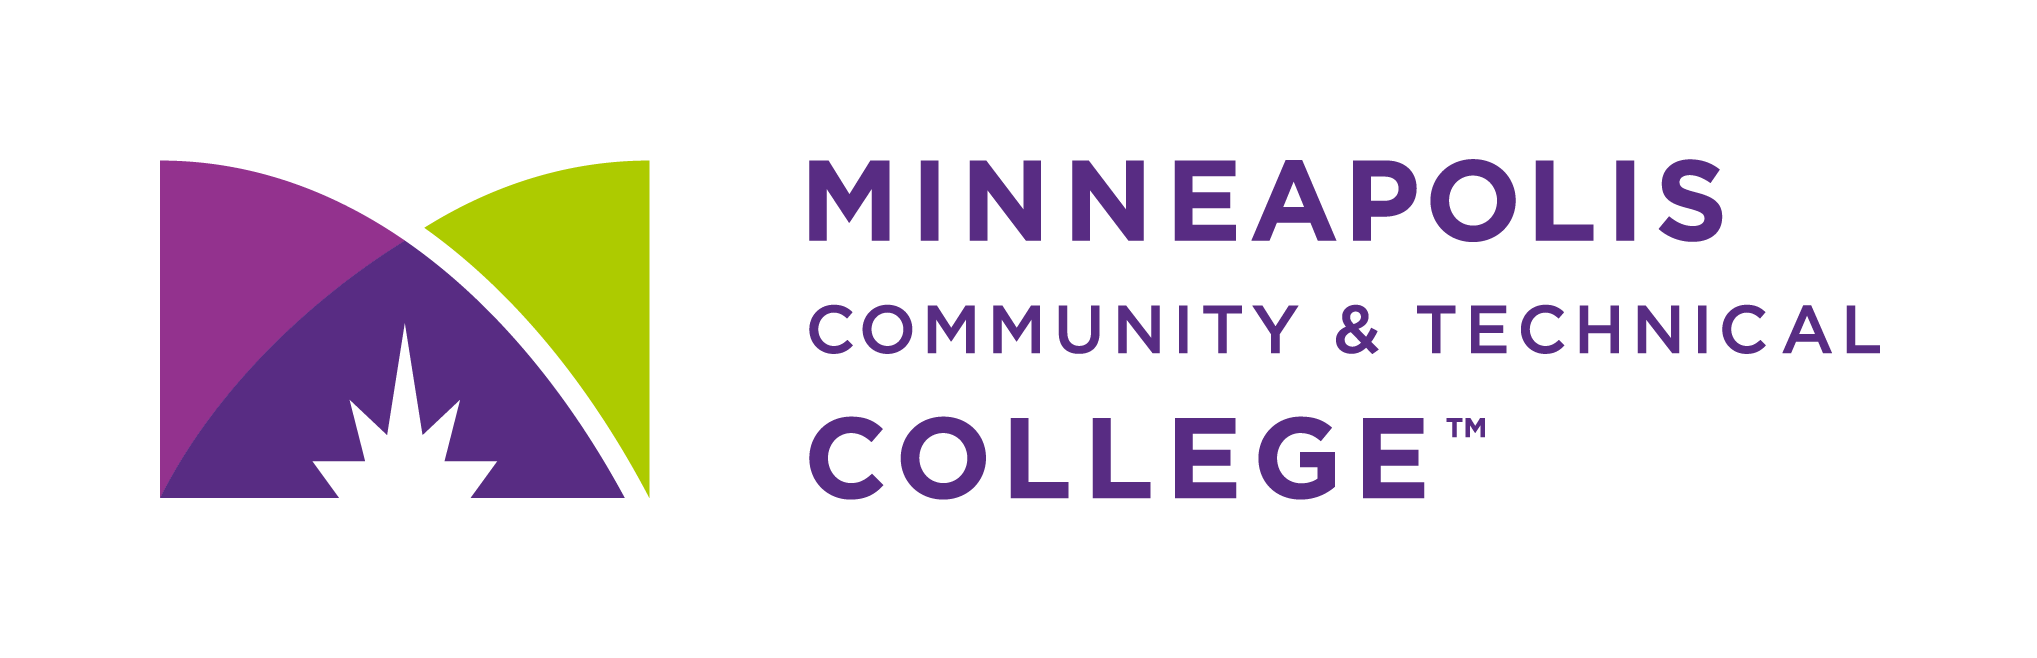 Minneapolis College Events